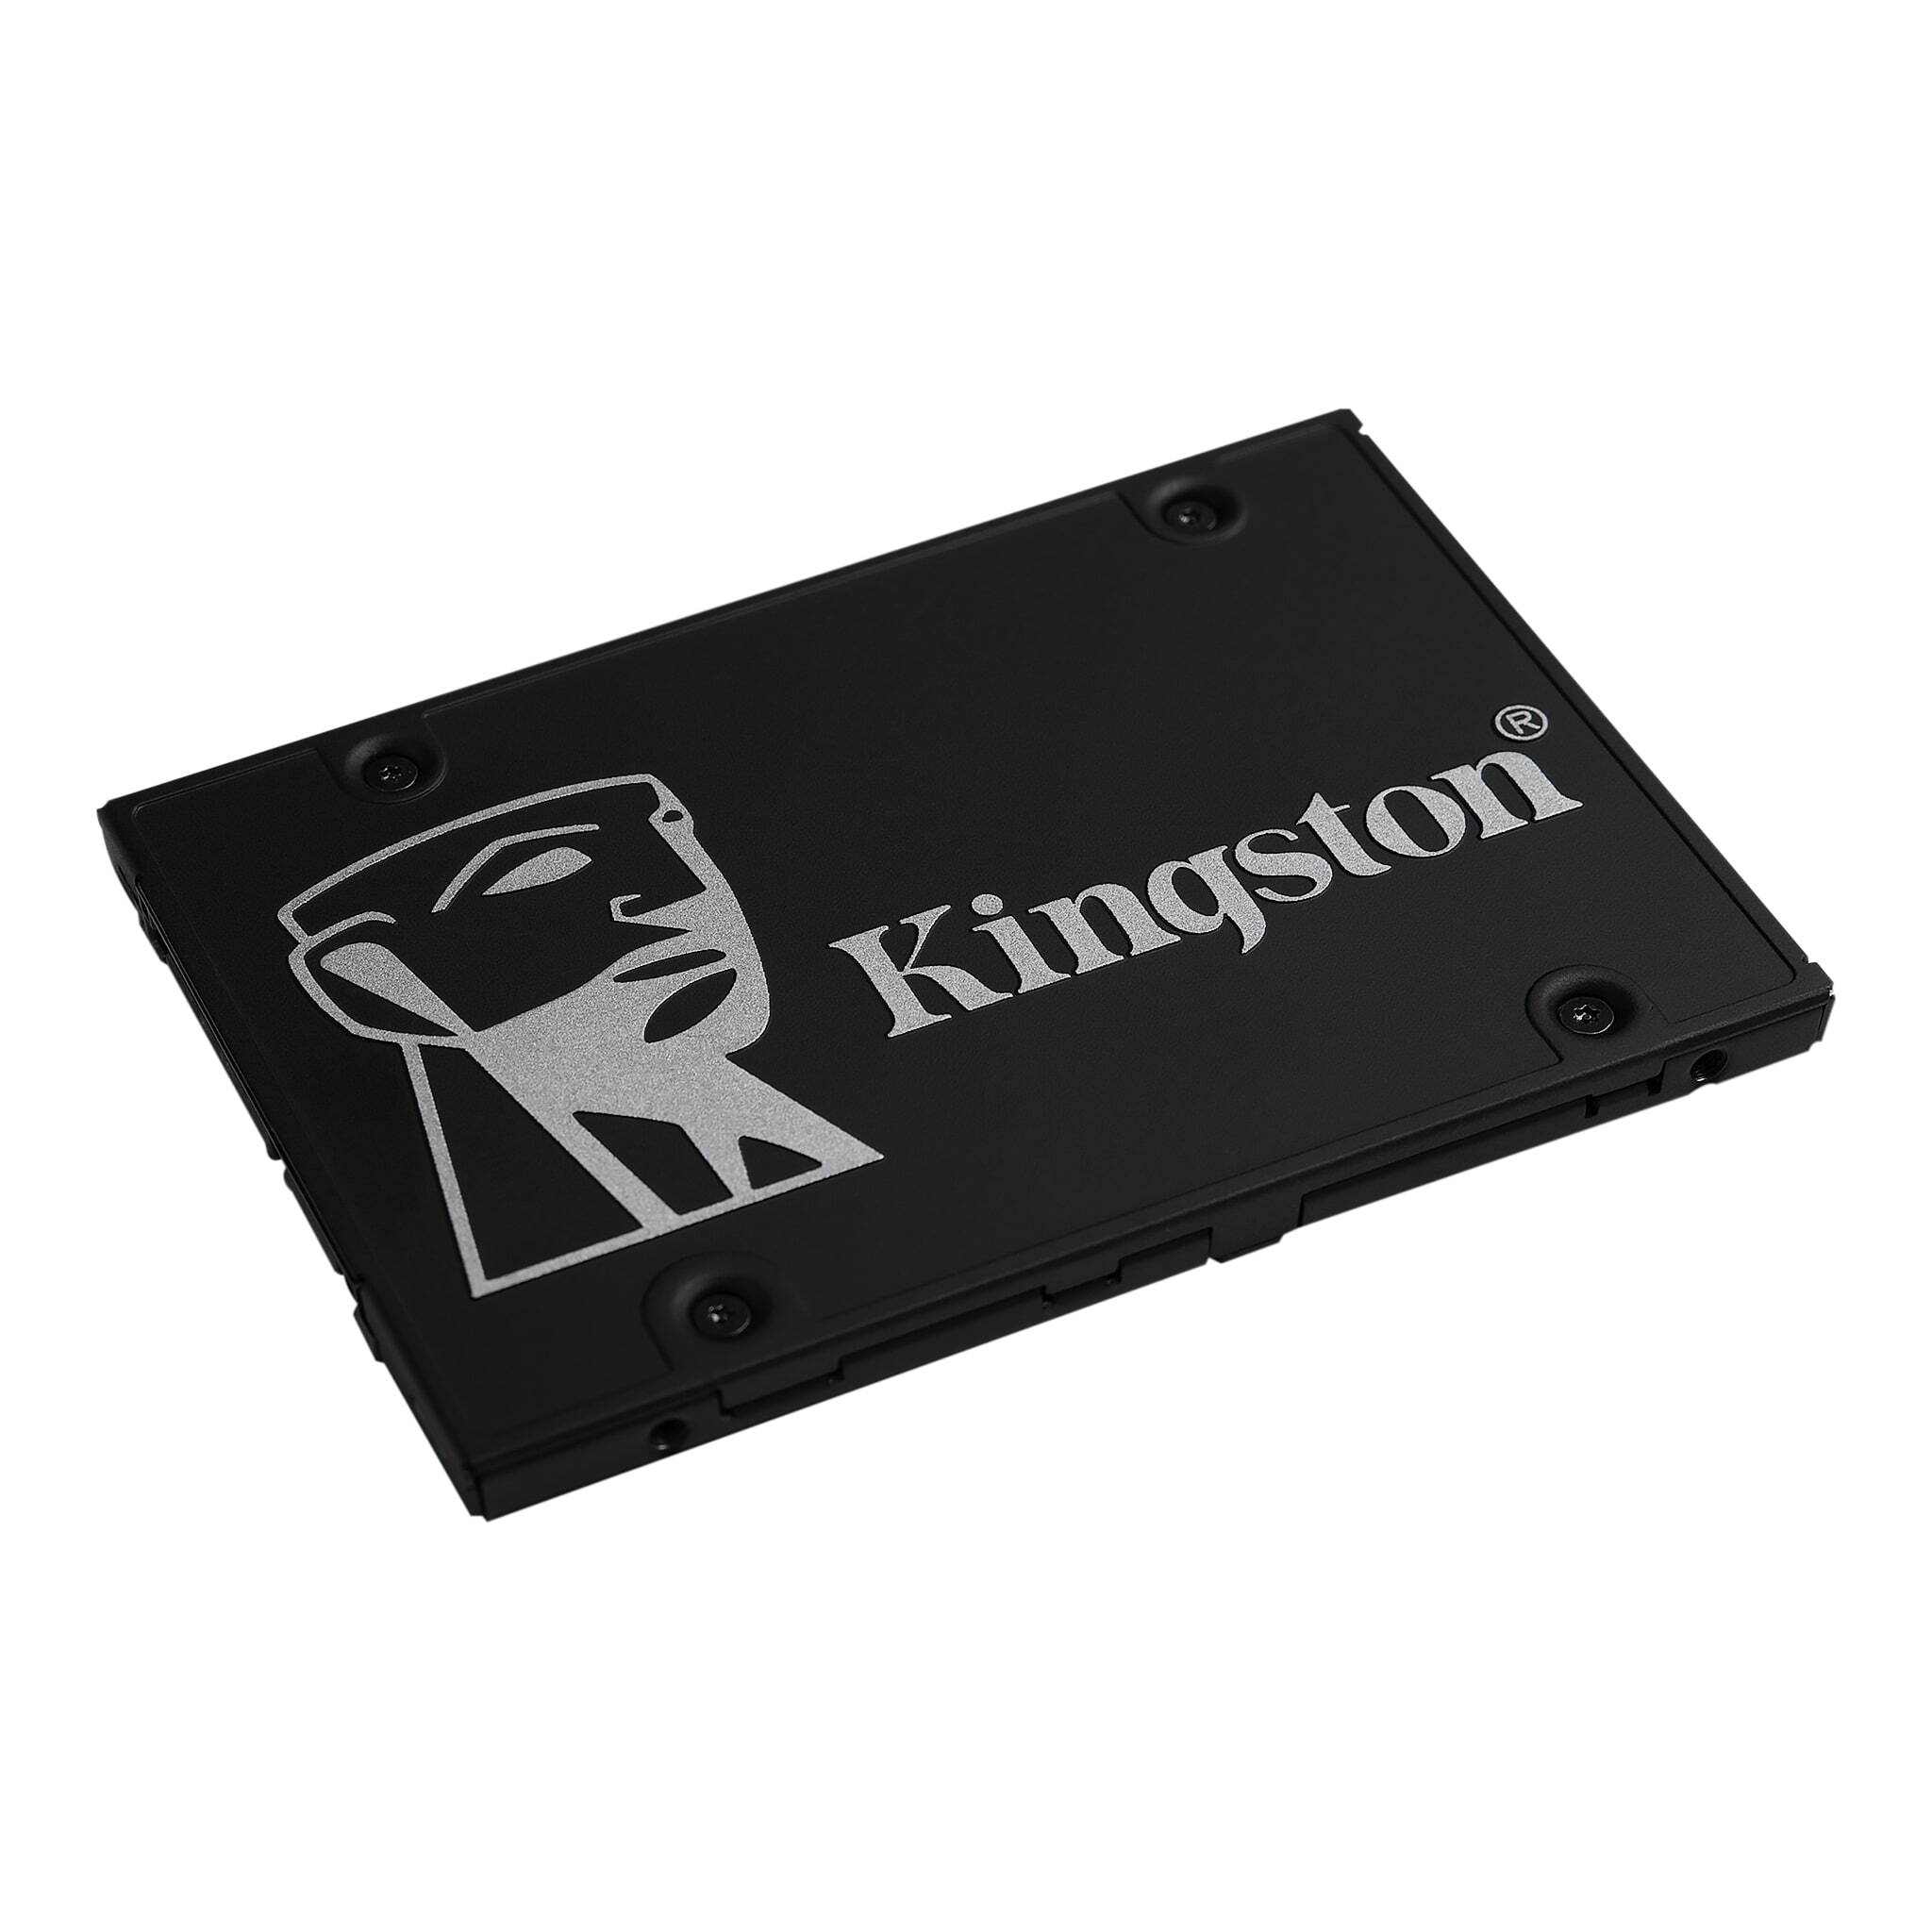 Внутренний твердотельный накопитель Kingston SSDNow KC600 1024GB